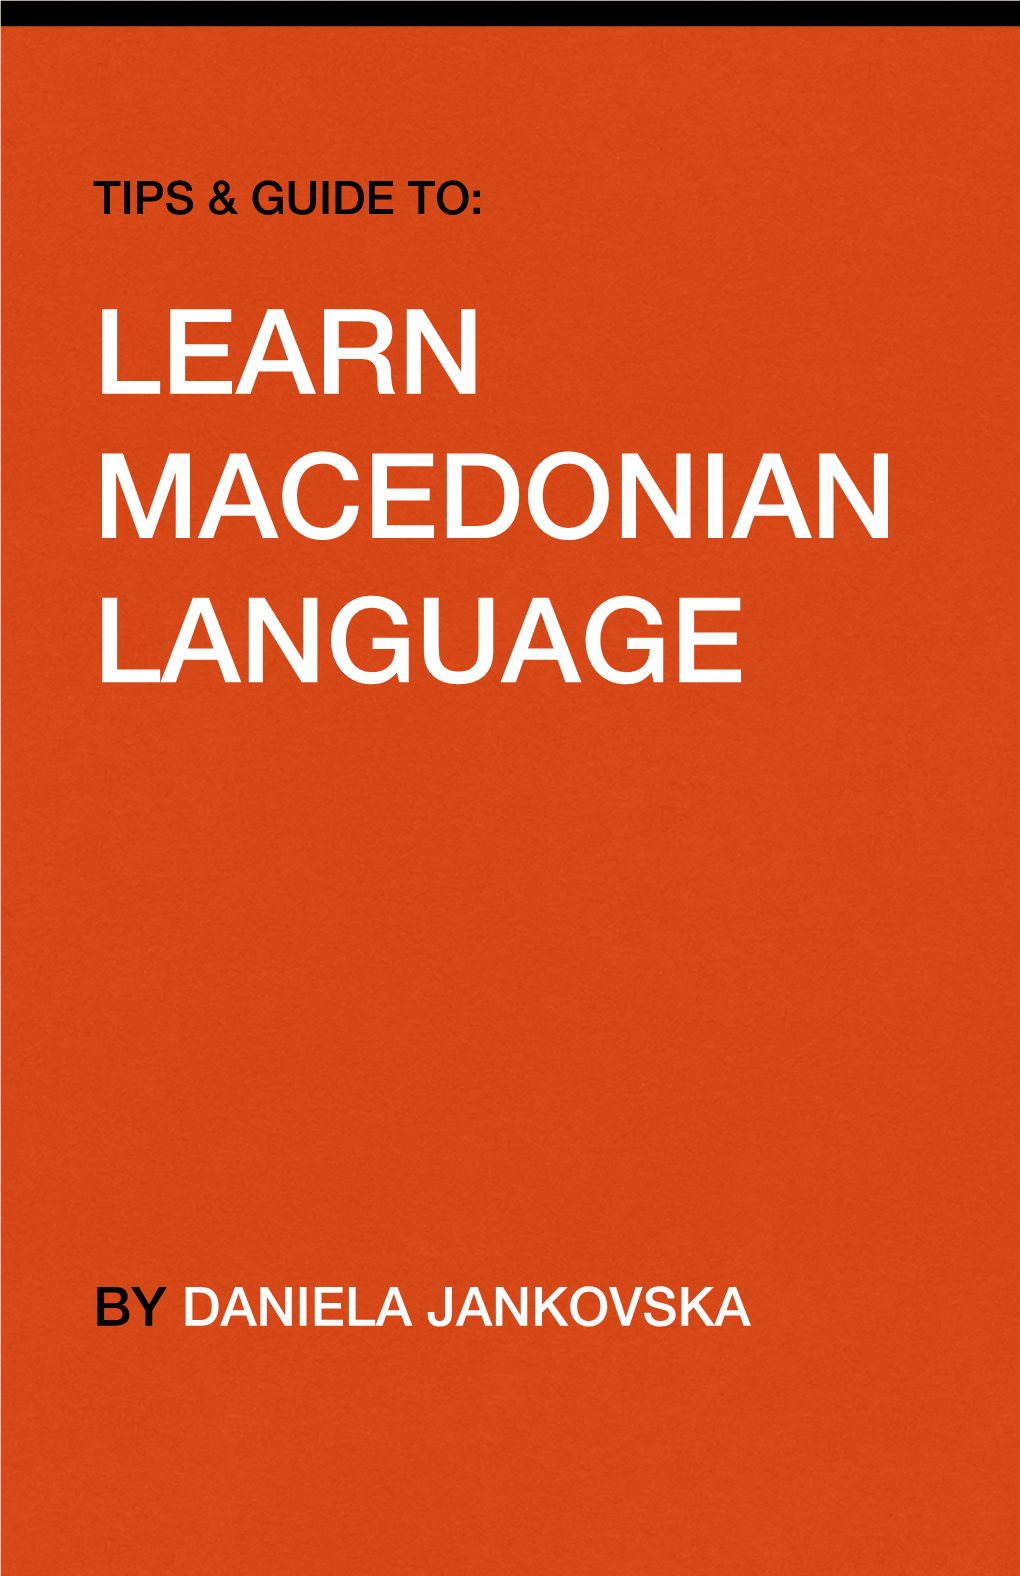 Learn Macedonian Language by Daniela Jankovska